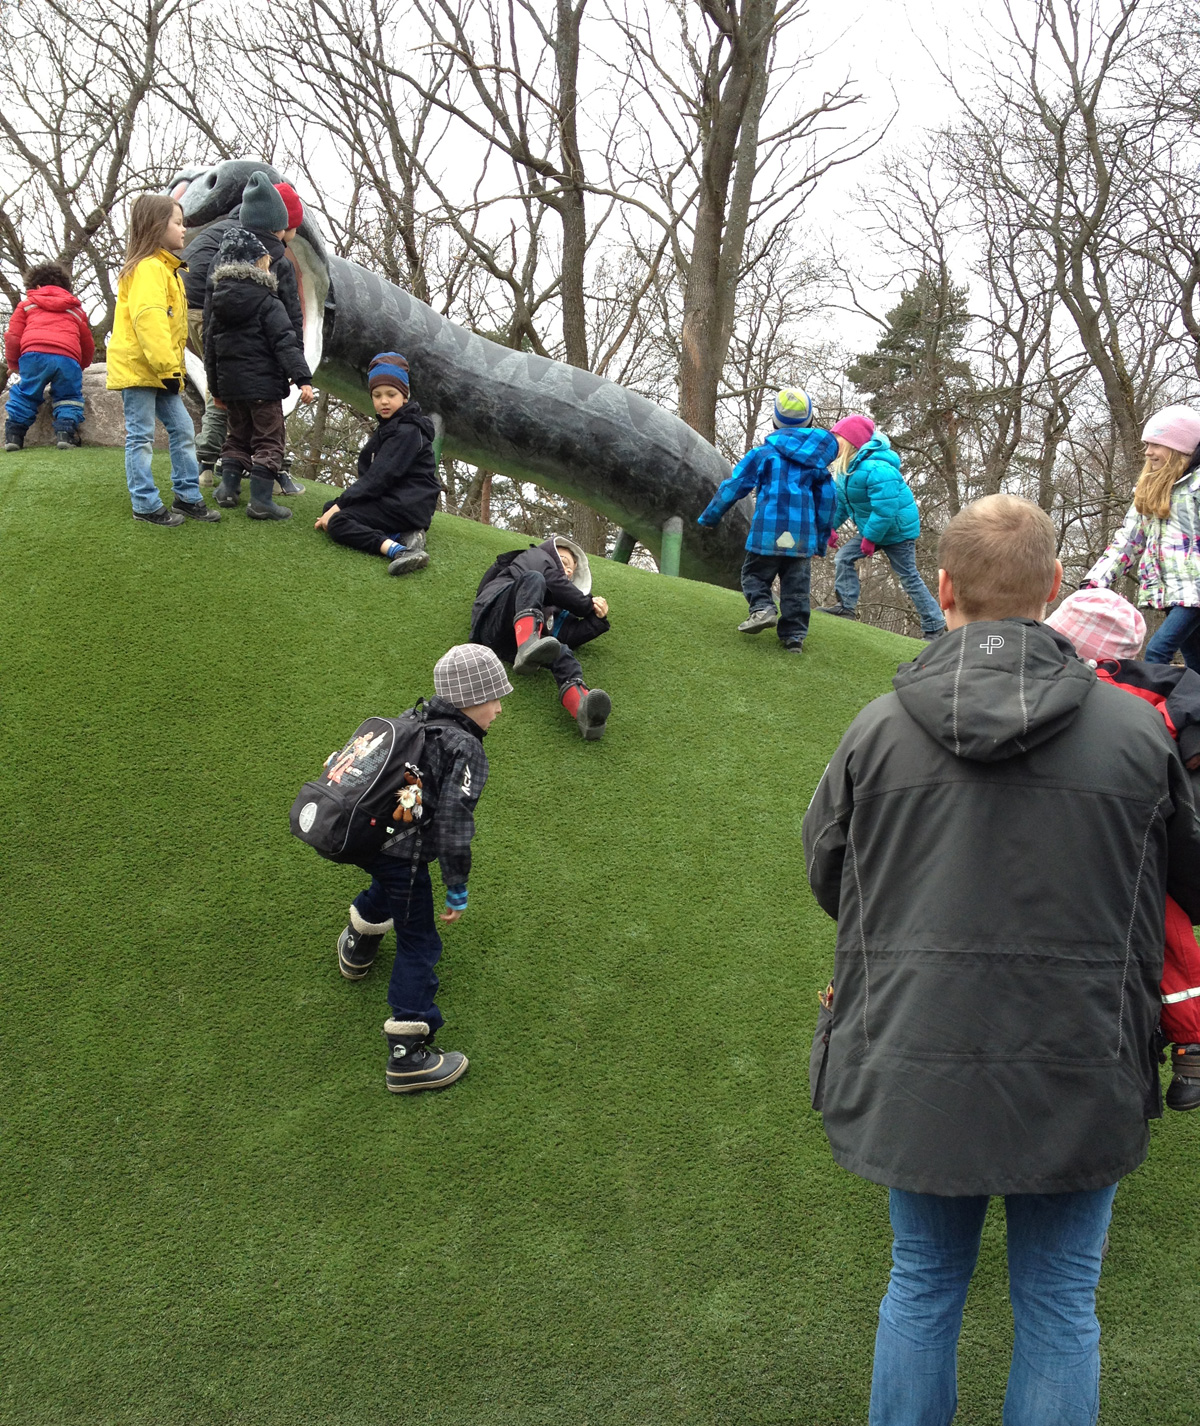 artificial-grass-playground-sweden2.jpg